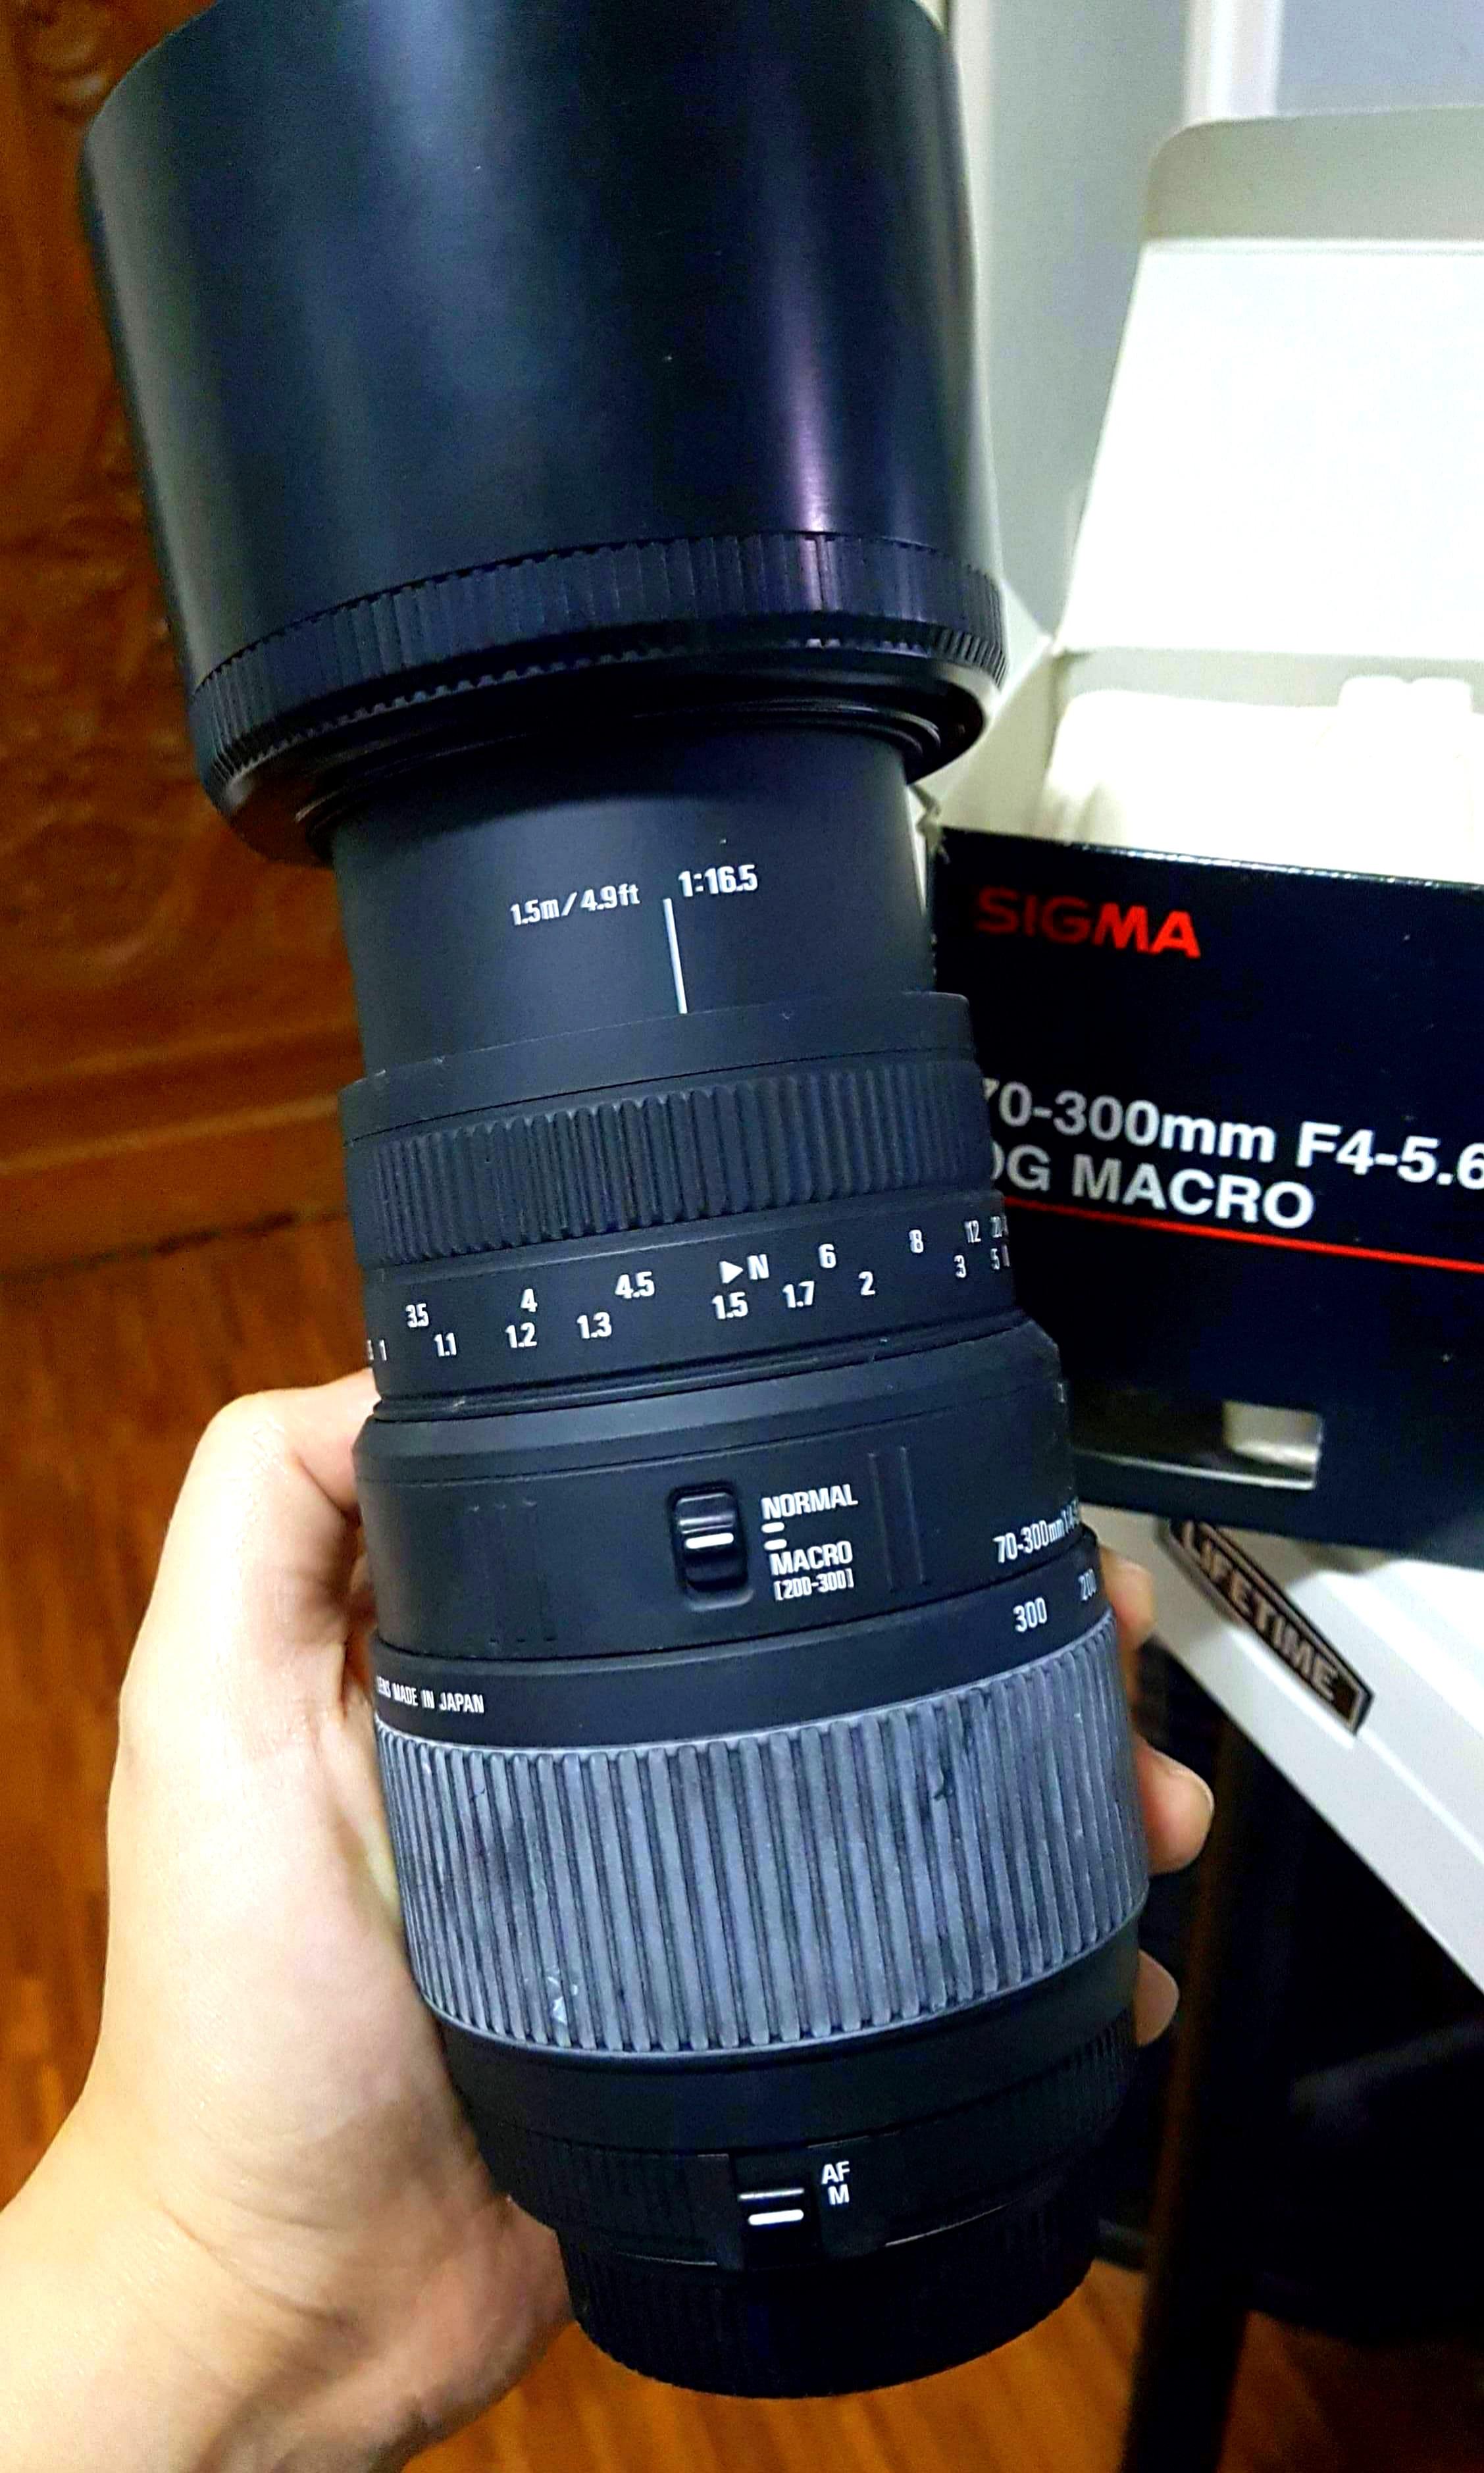 SIGMA 70-300mm F4-5.6 DG Macro photo